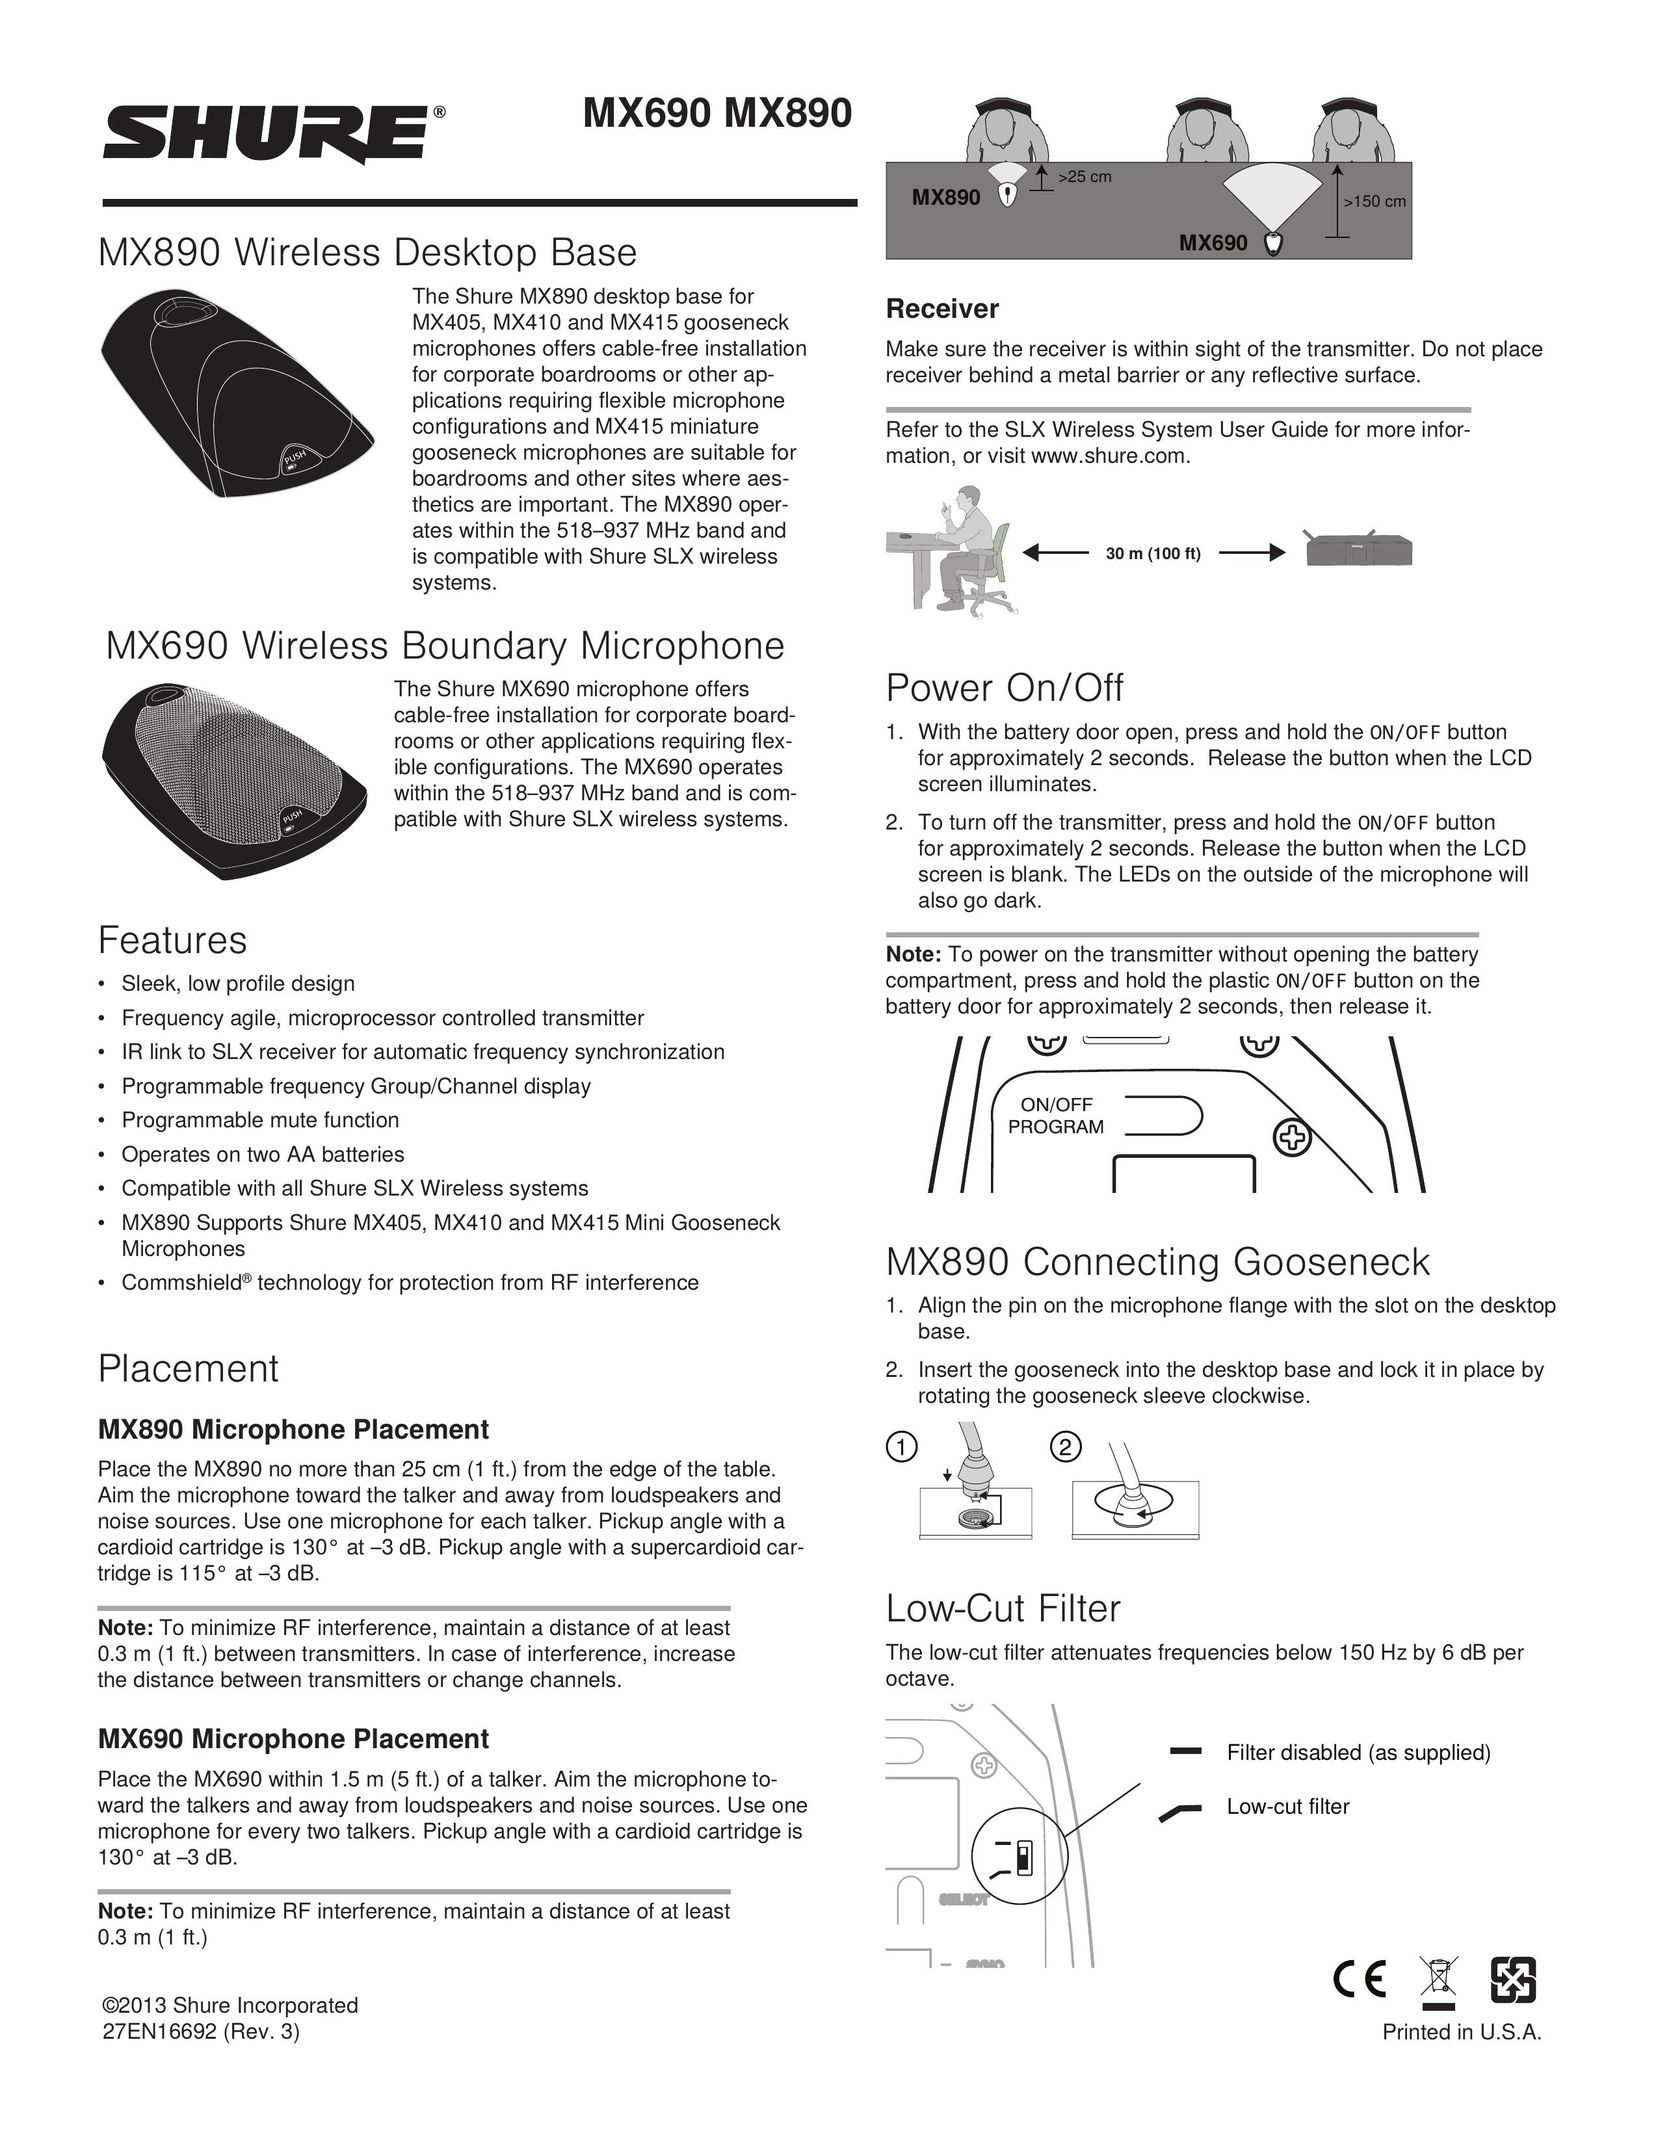 Shure MX890 Personal Computer User Manual